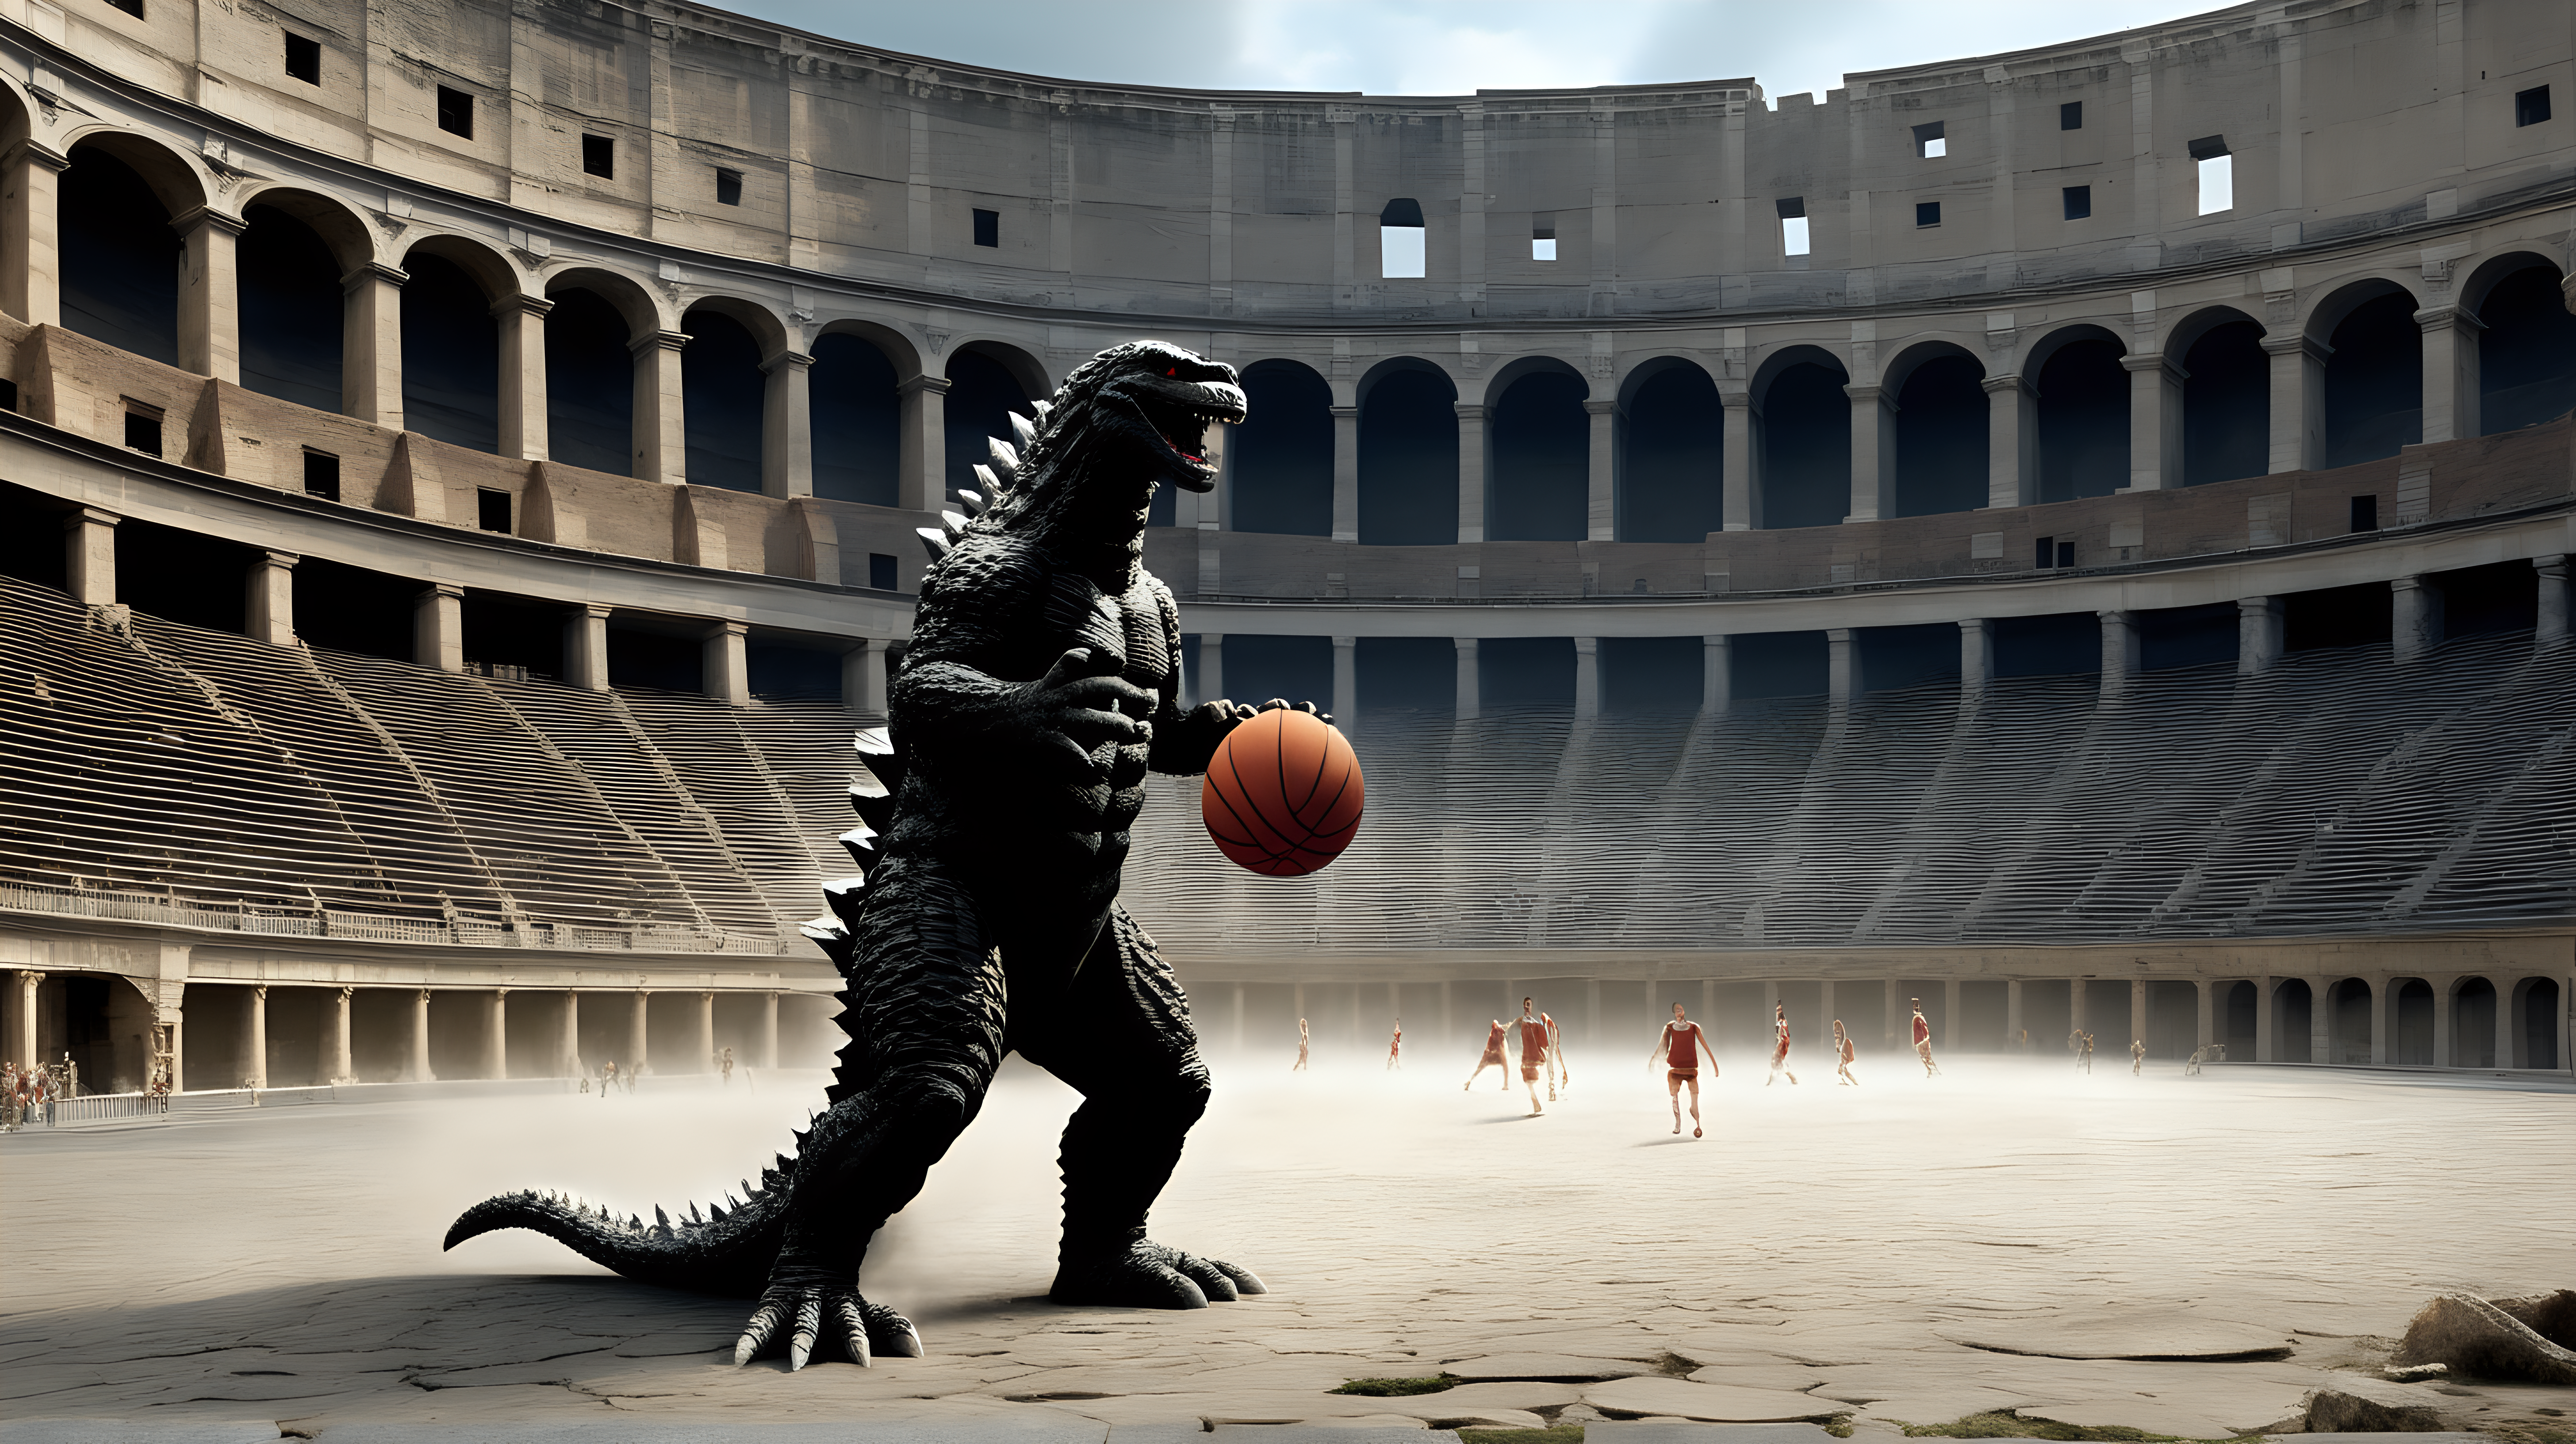 Godzilla playing basketball in the Roman coliseum